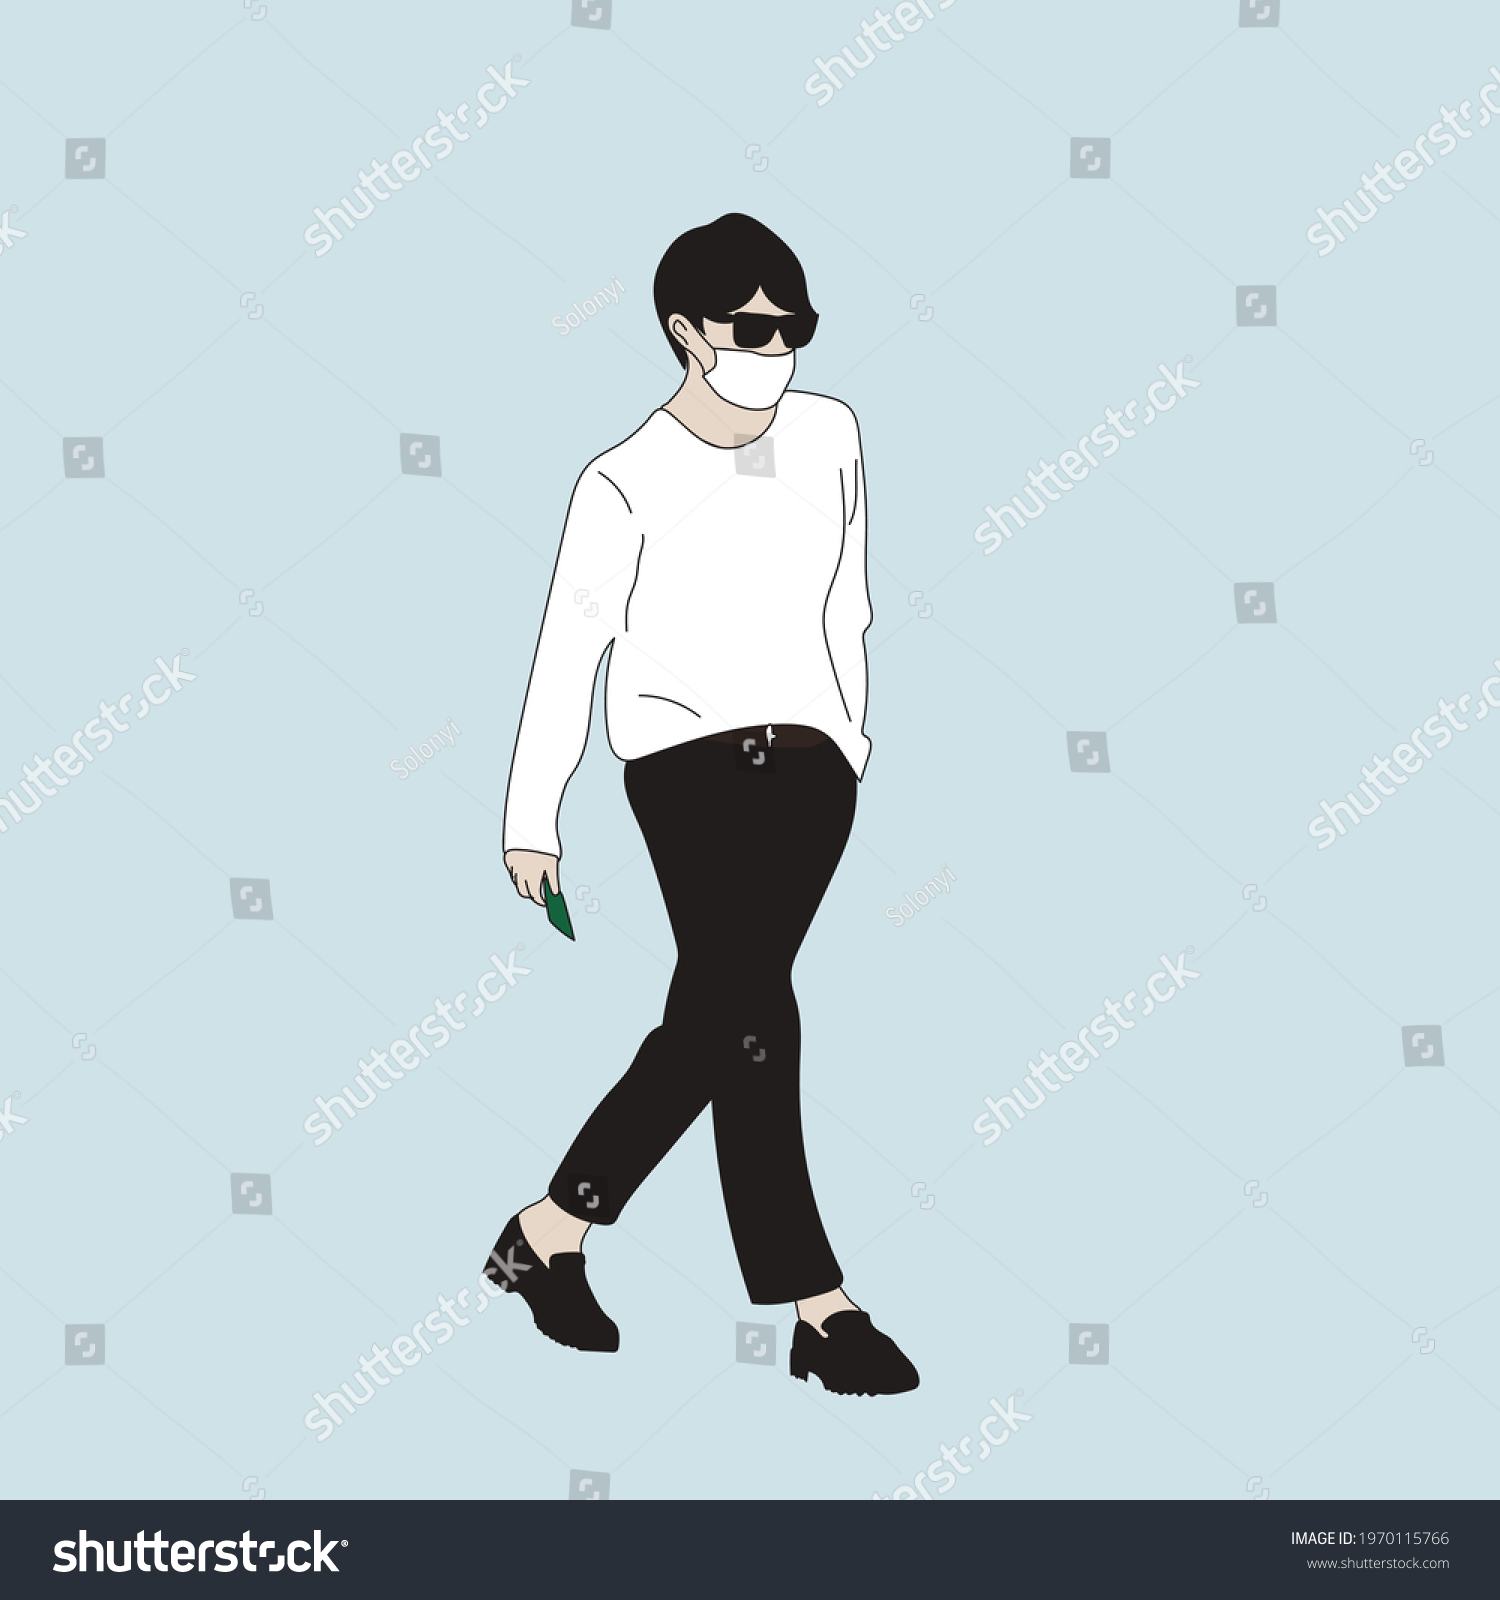 SVG of Vector illustration of Kpop street fashion. Street idols of Koreans. Kpop men's fashion idol. A guy in black pants and a white sweatshirt. svg